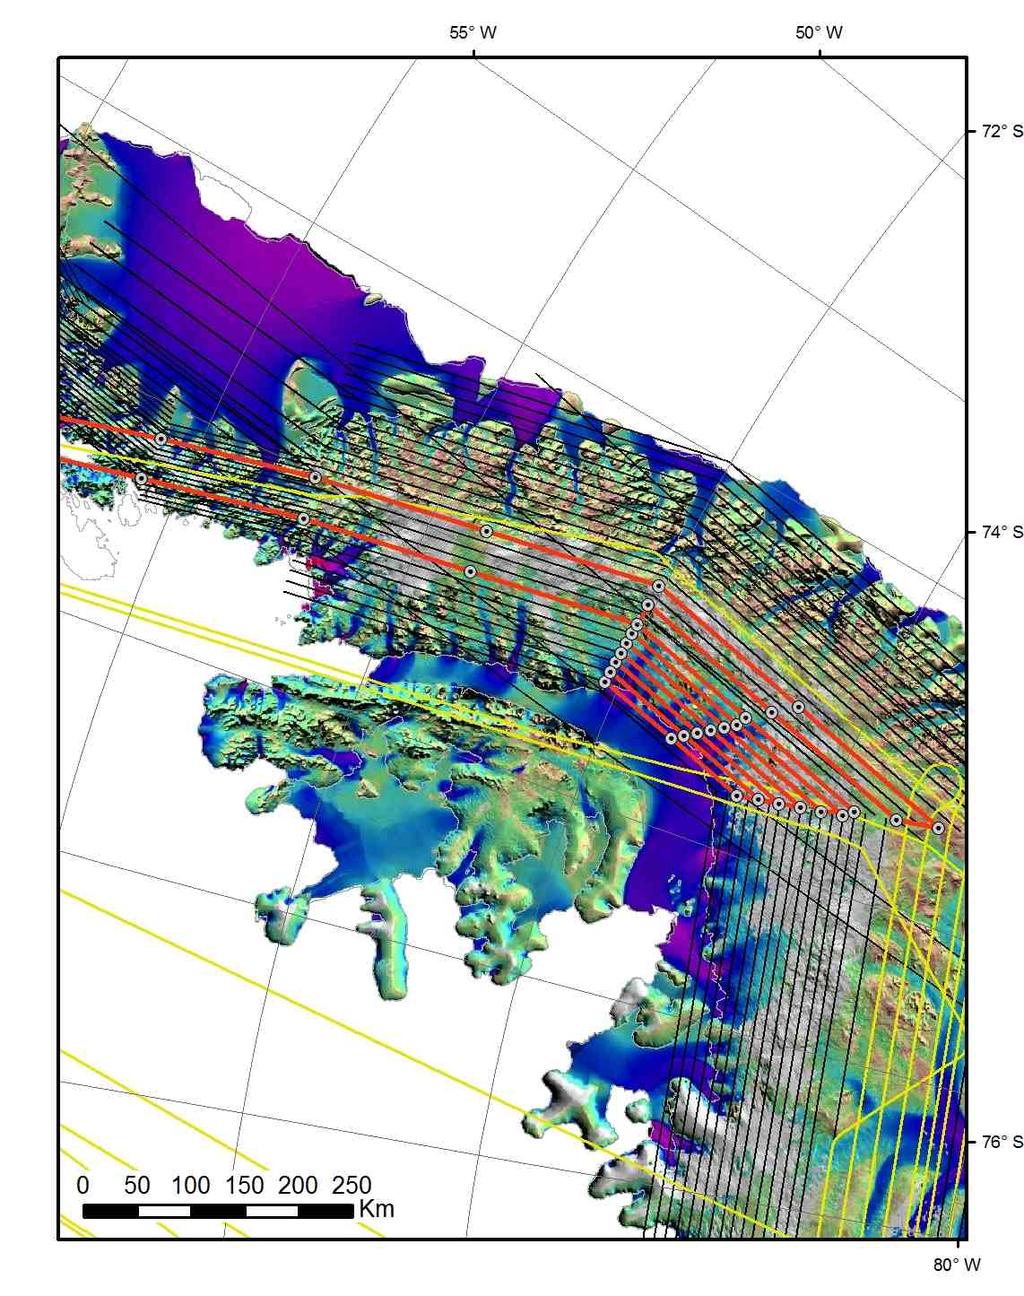 LVIS 2012 Antarctica Mapping Lines 7/13/12 12 Palmer: Priority 5 Flight: W Palmer